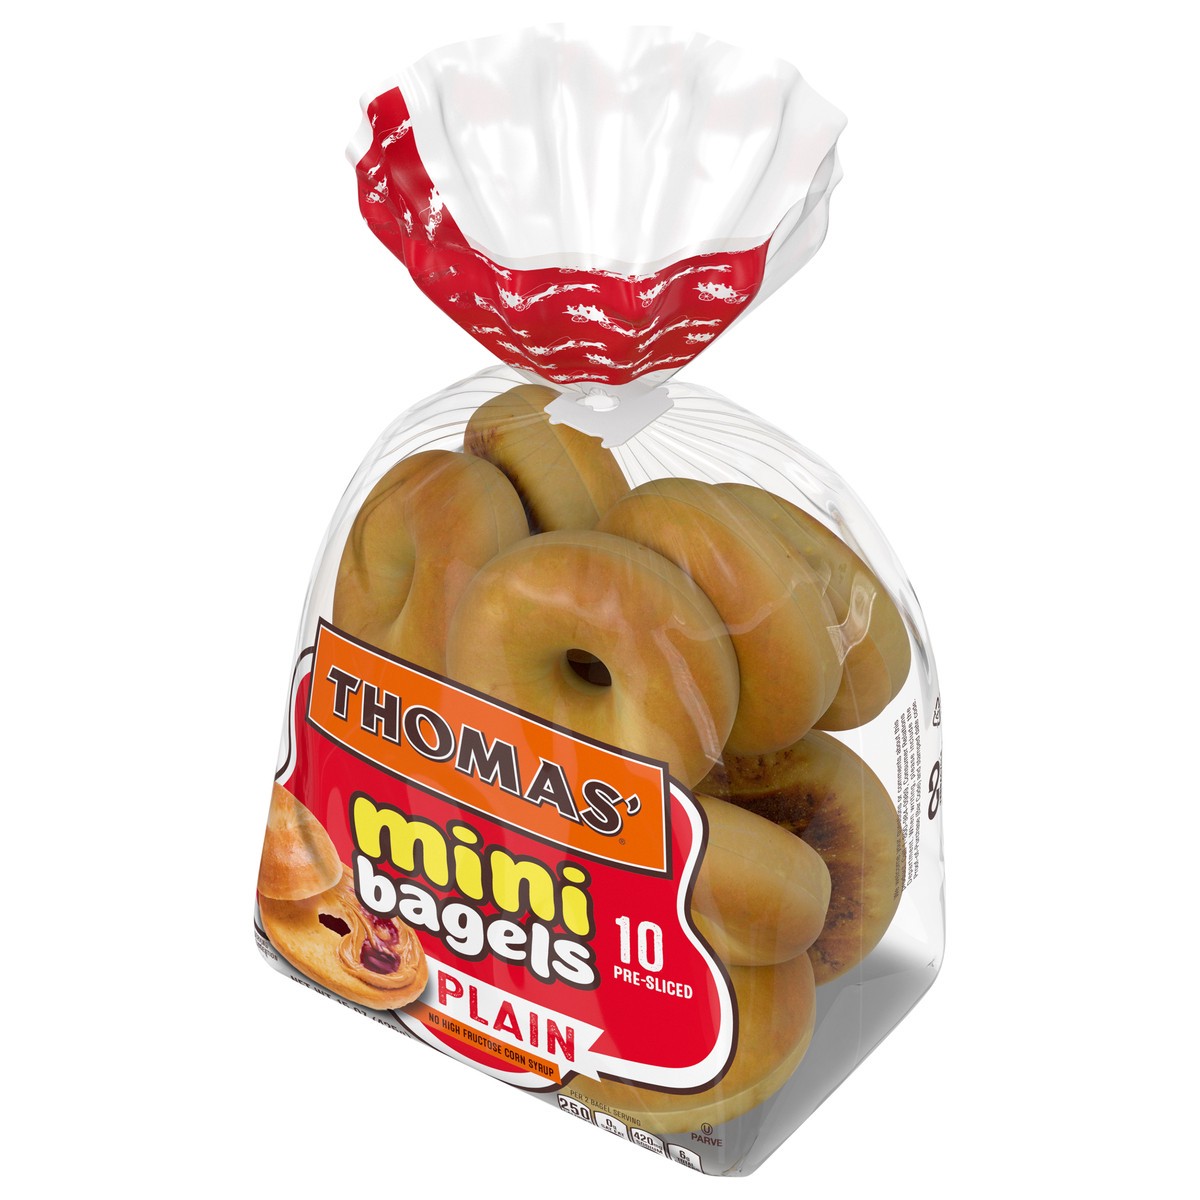 slide 5 of 9, Thomas' Plain Mini Bagels, 10 count, 15 oz, 10 ct